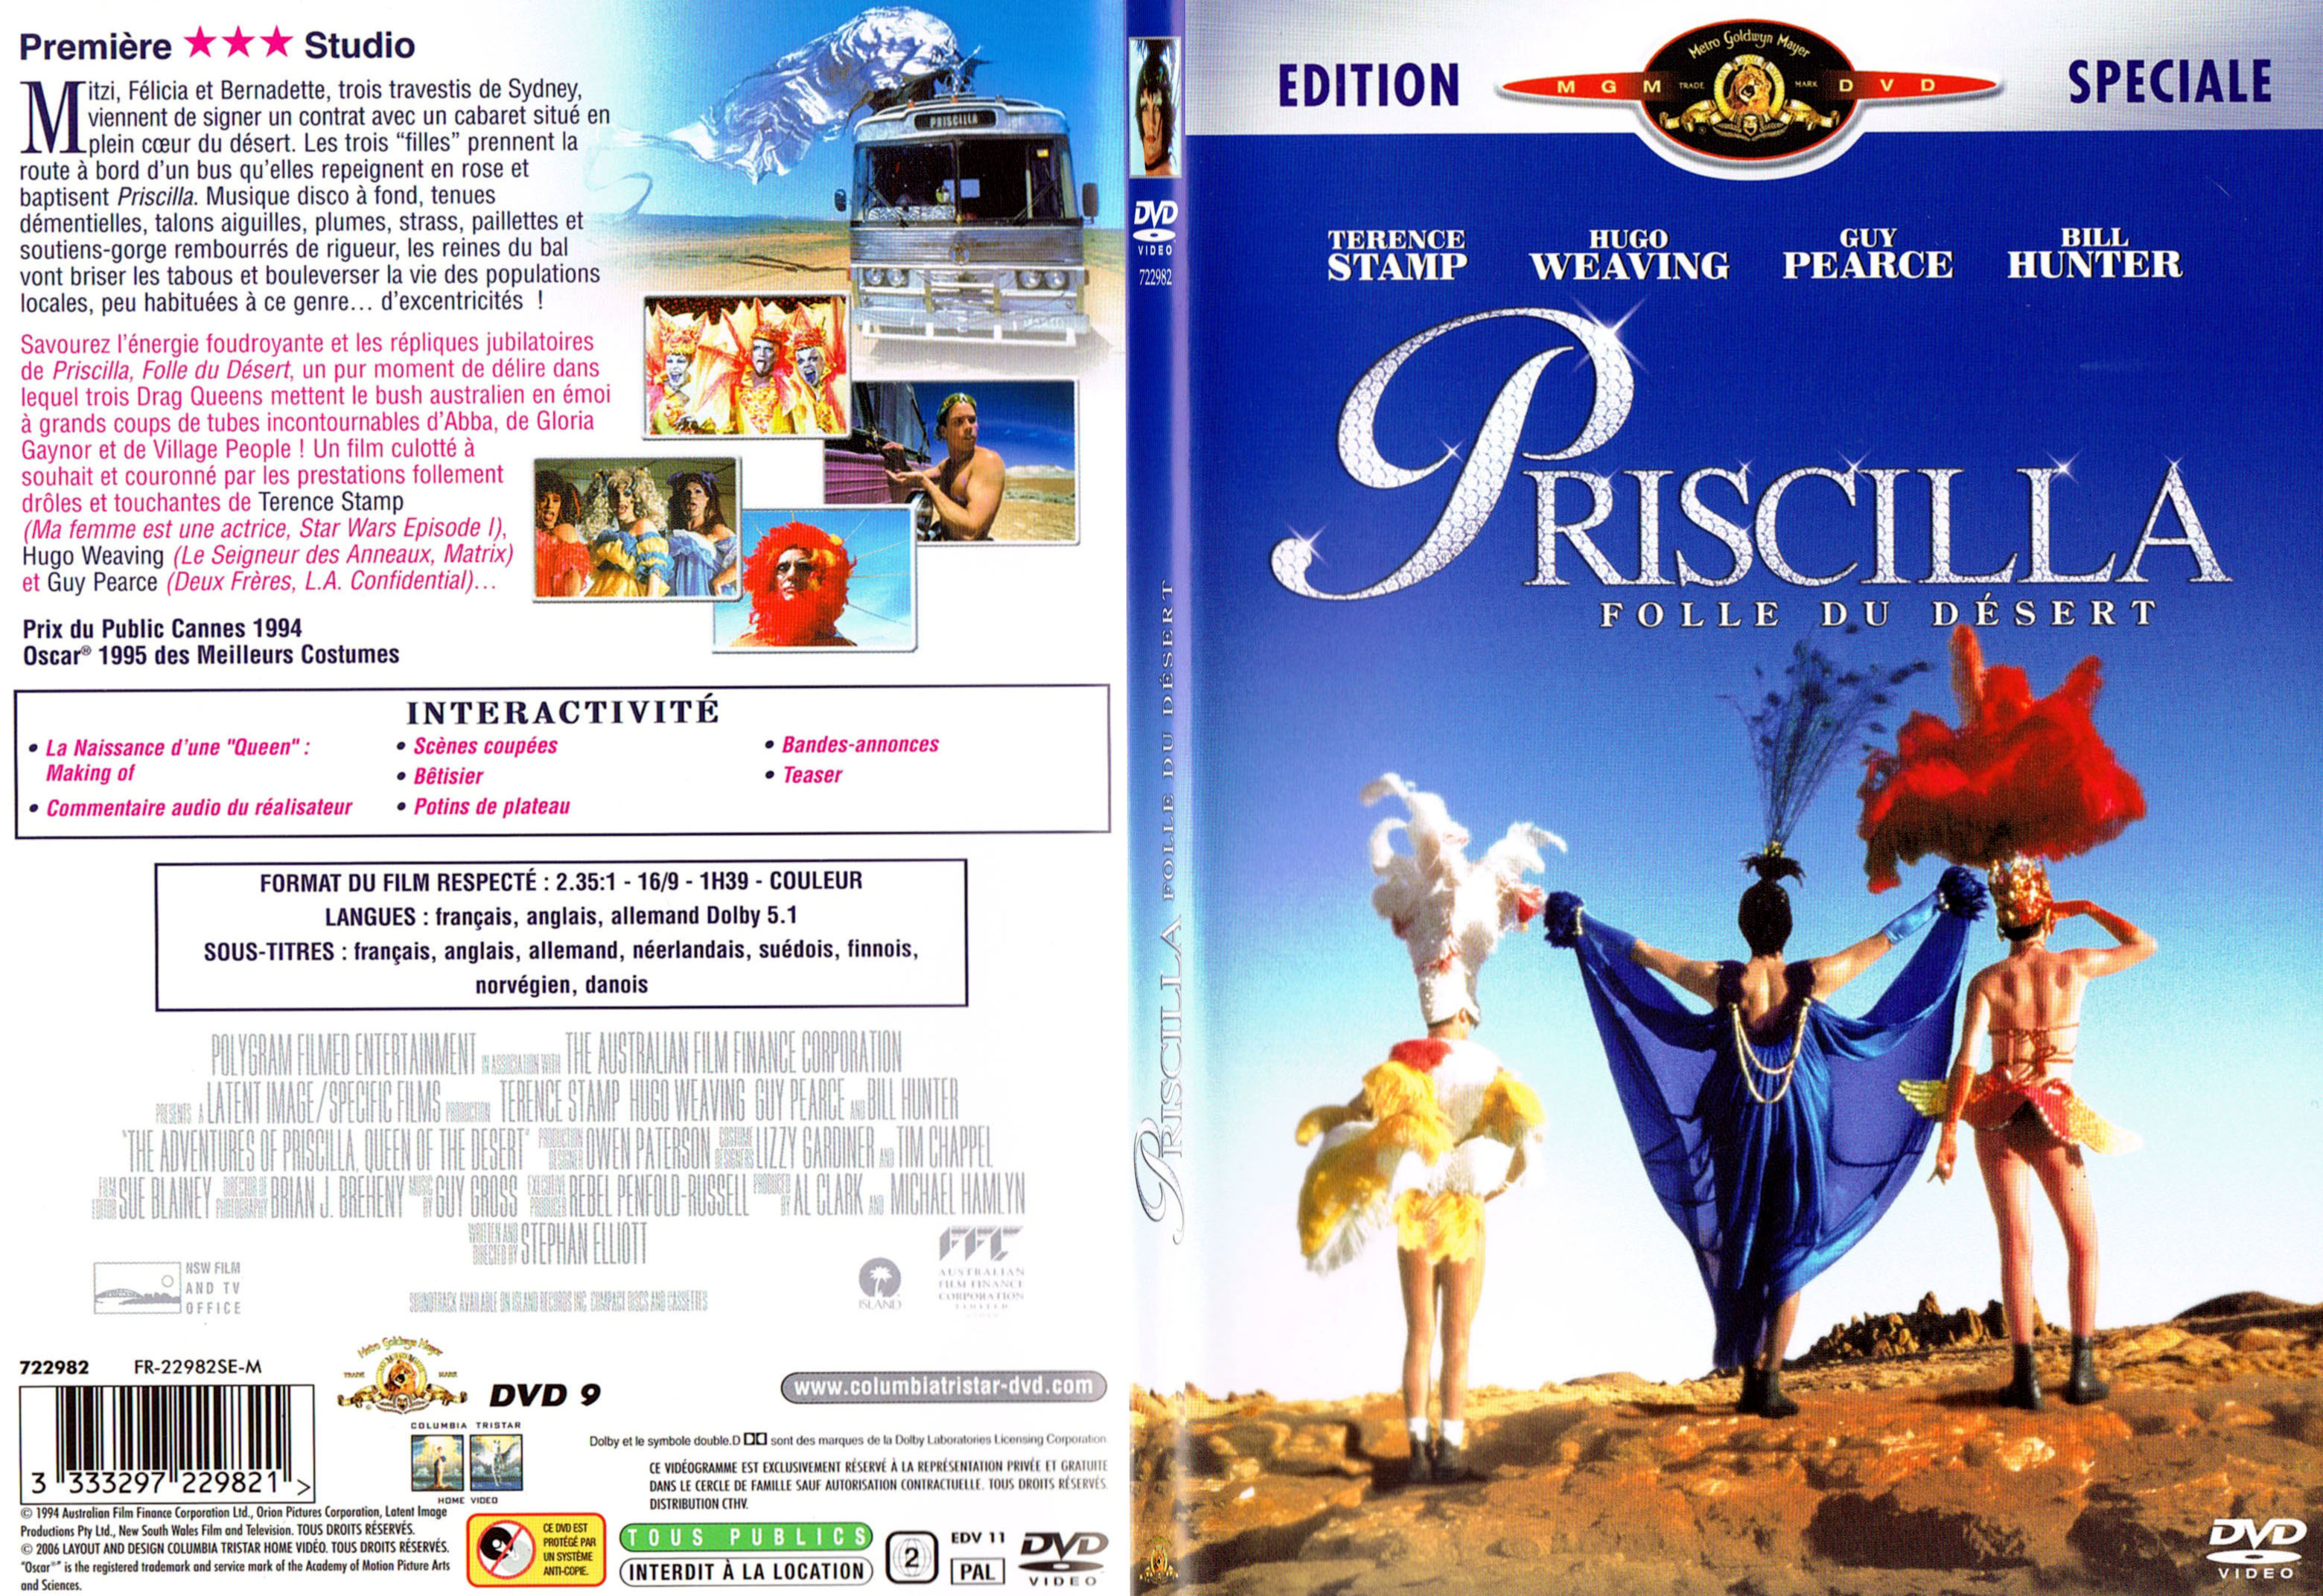 Jaquette DVD Priscilla folle du dsert - SLIM v2 